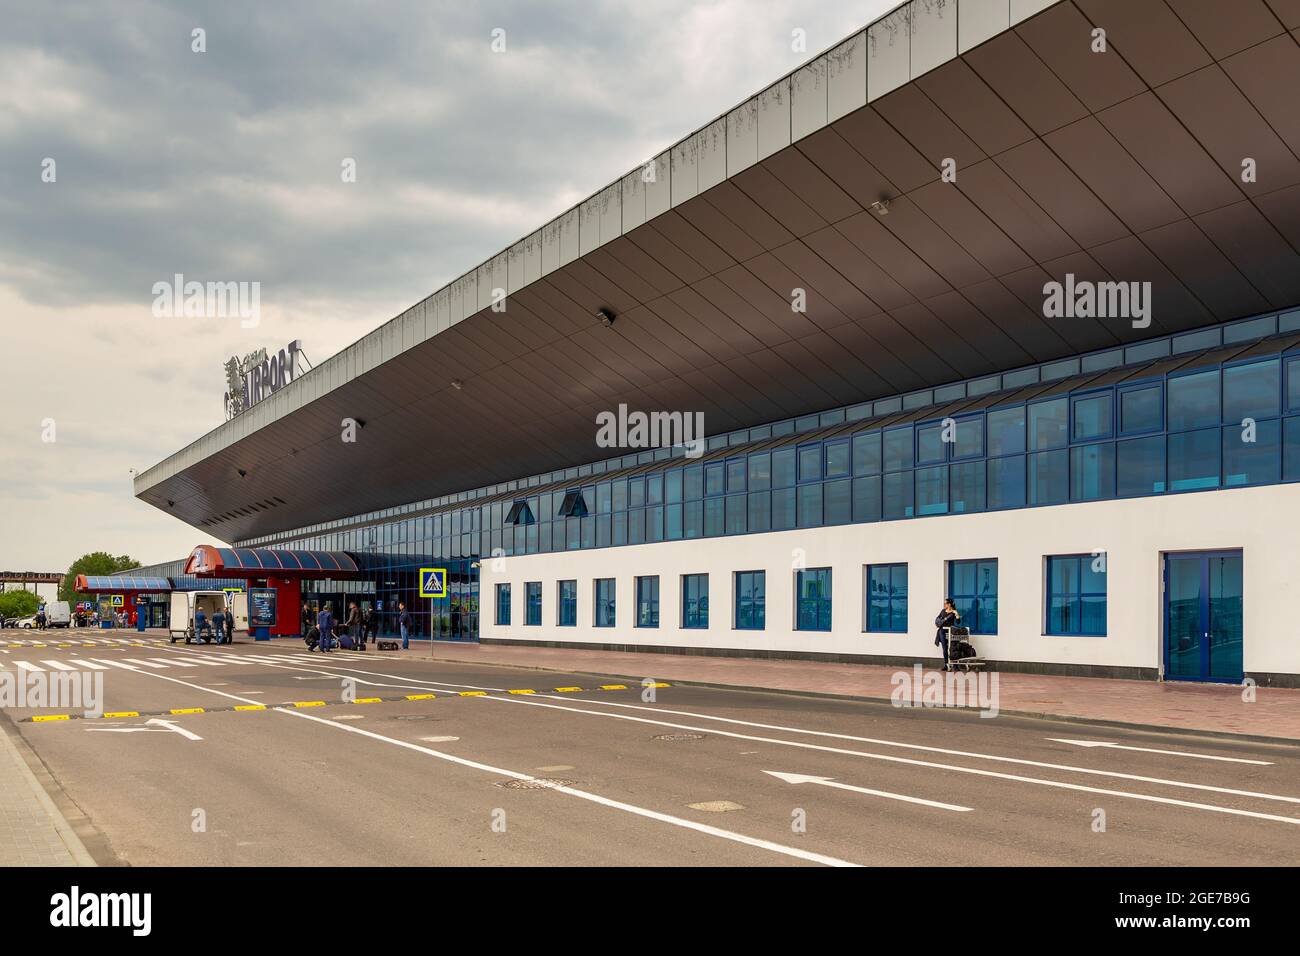 Chisinau, Kishinev, Republic of Moldova - 30 April 2016: View of the Chisinau Airport. International airport of the country. Stock Photo